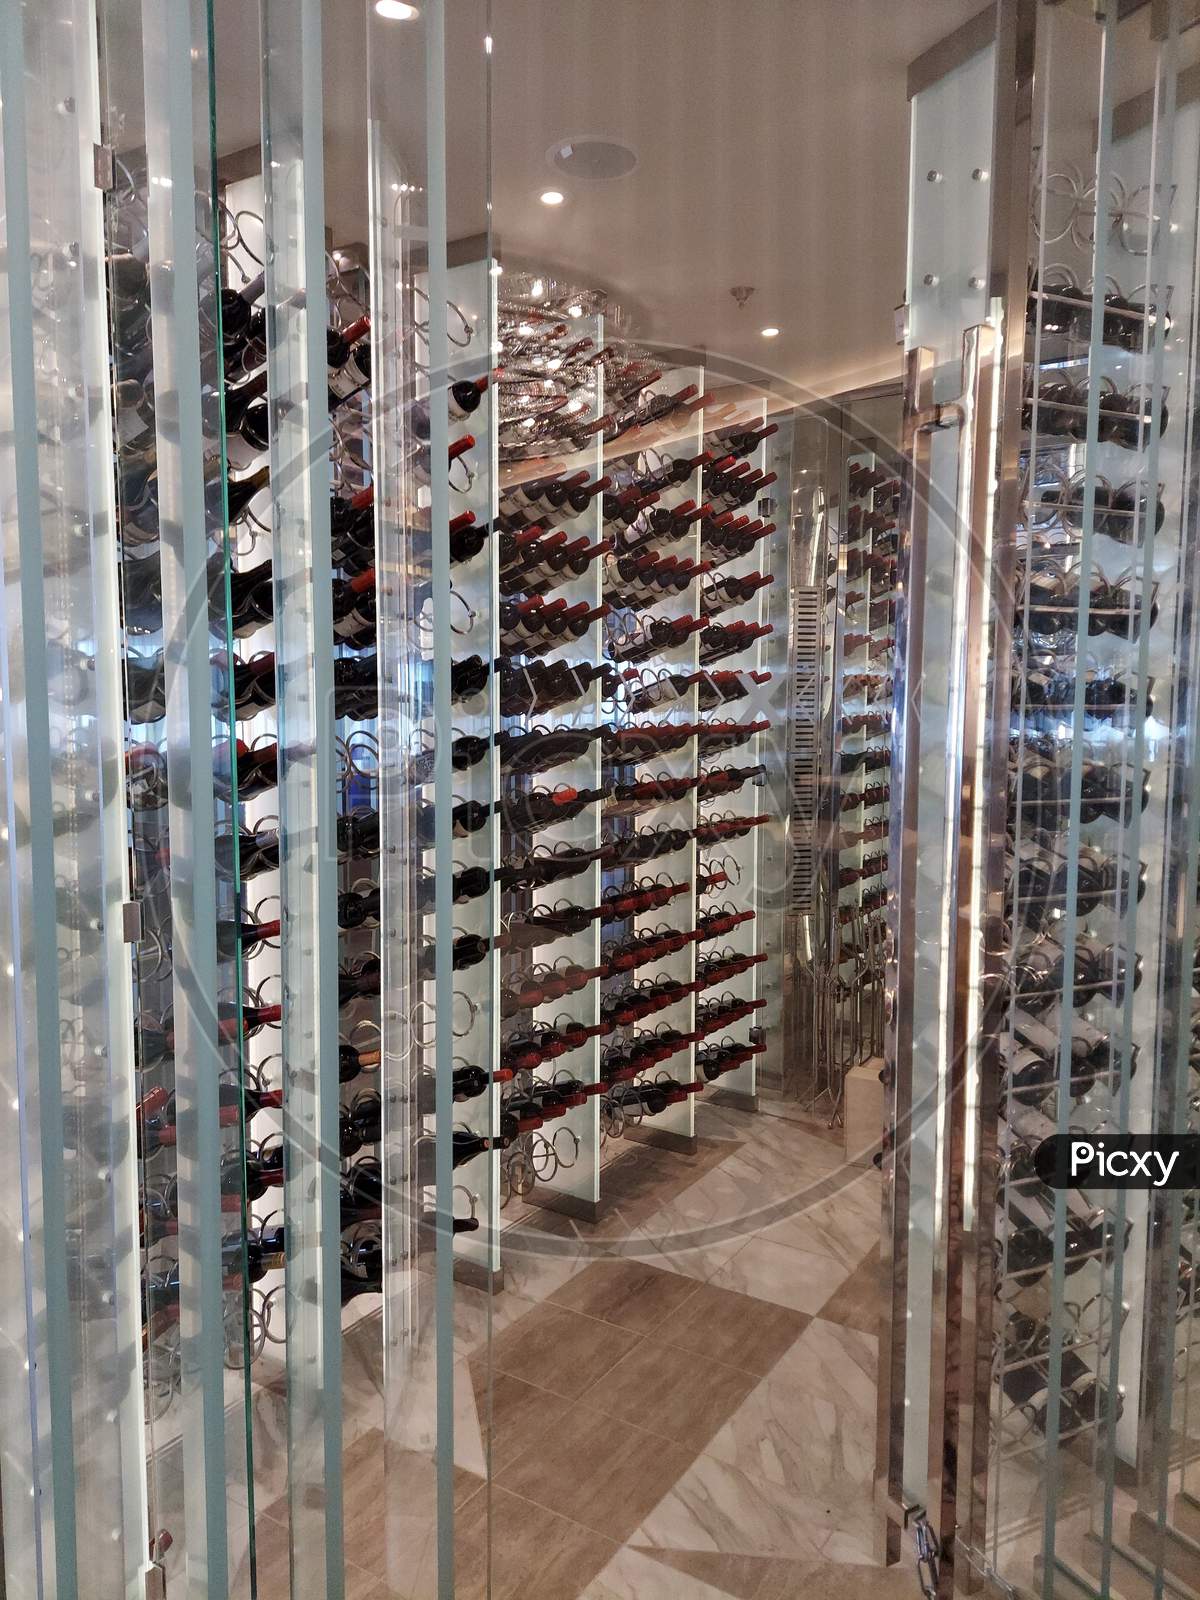 Beautifully Arranged Wine Bottles Display On A Cruise Ship Restaurant Entrance